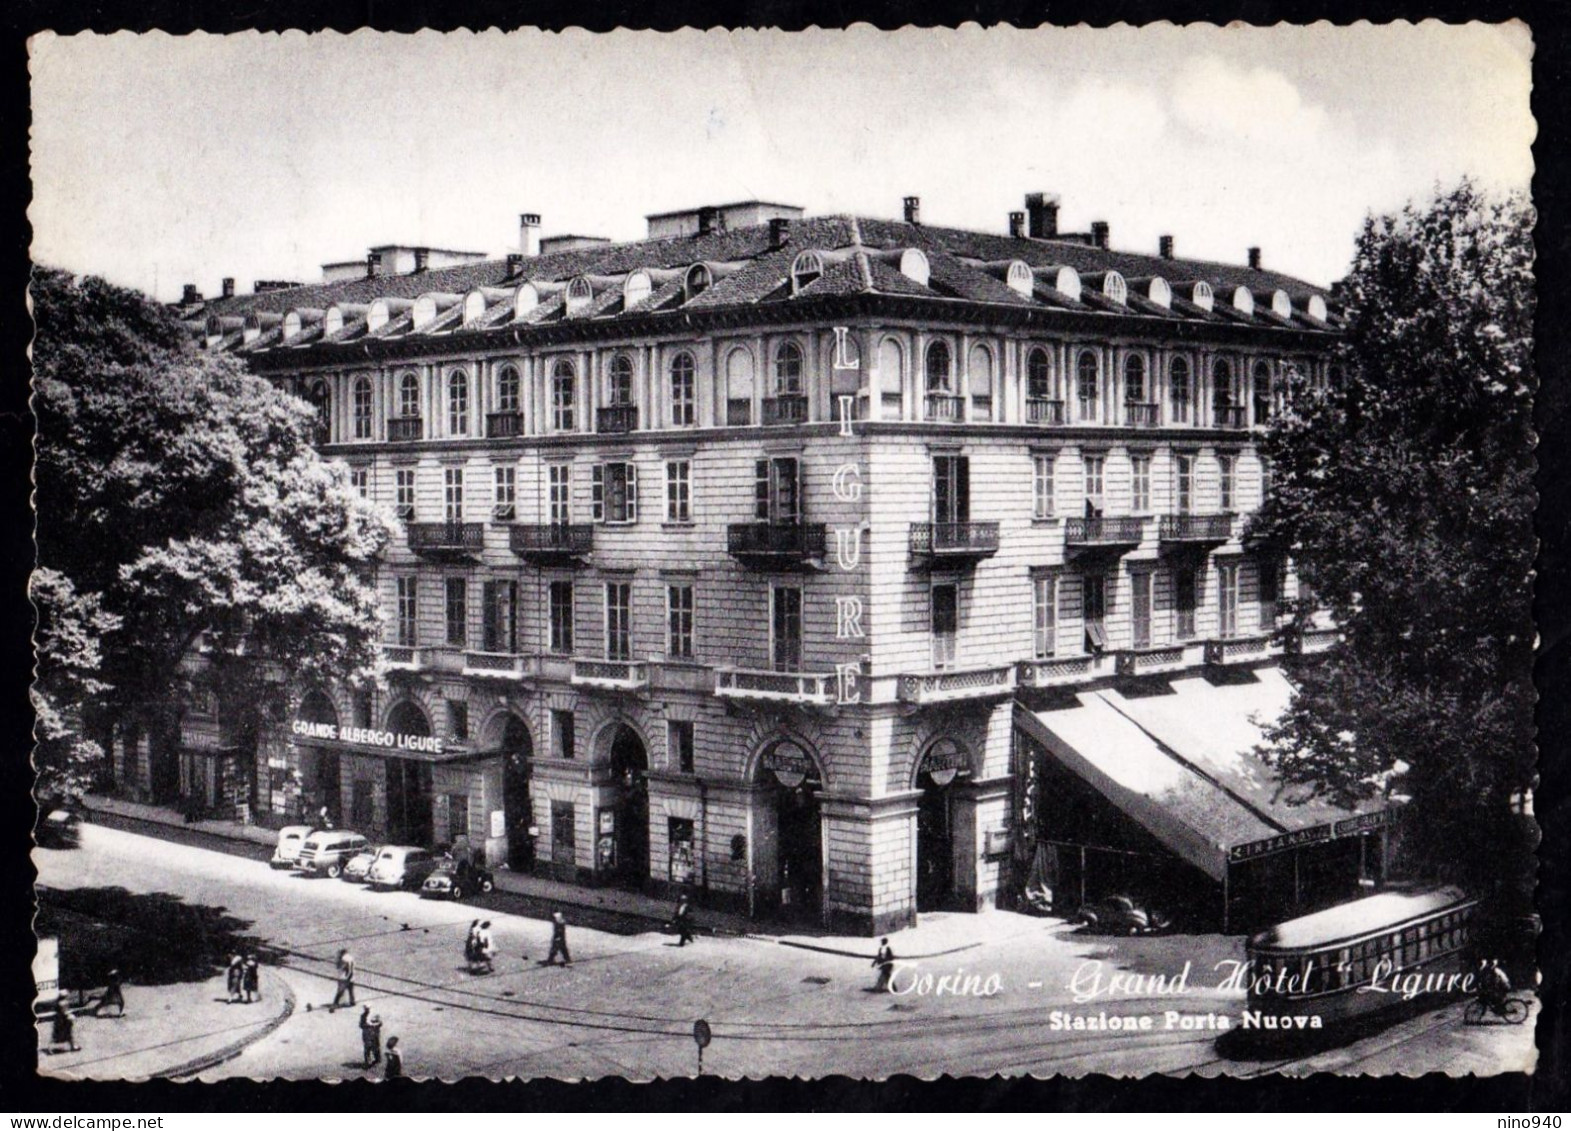 TORINO - Grand Hotel Ligure -  F/G - V: 1952 - T -  Stazione Porta Nuova - Bar, Alberghi & Ristoranti